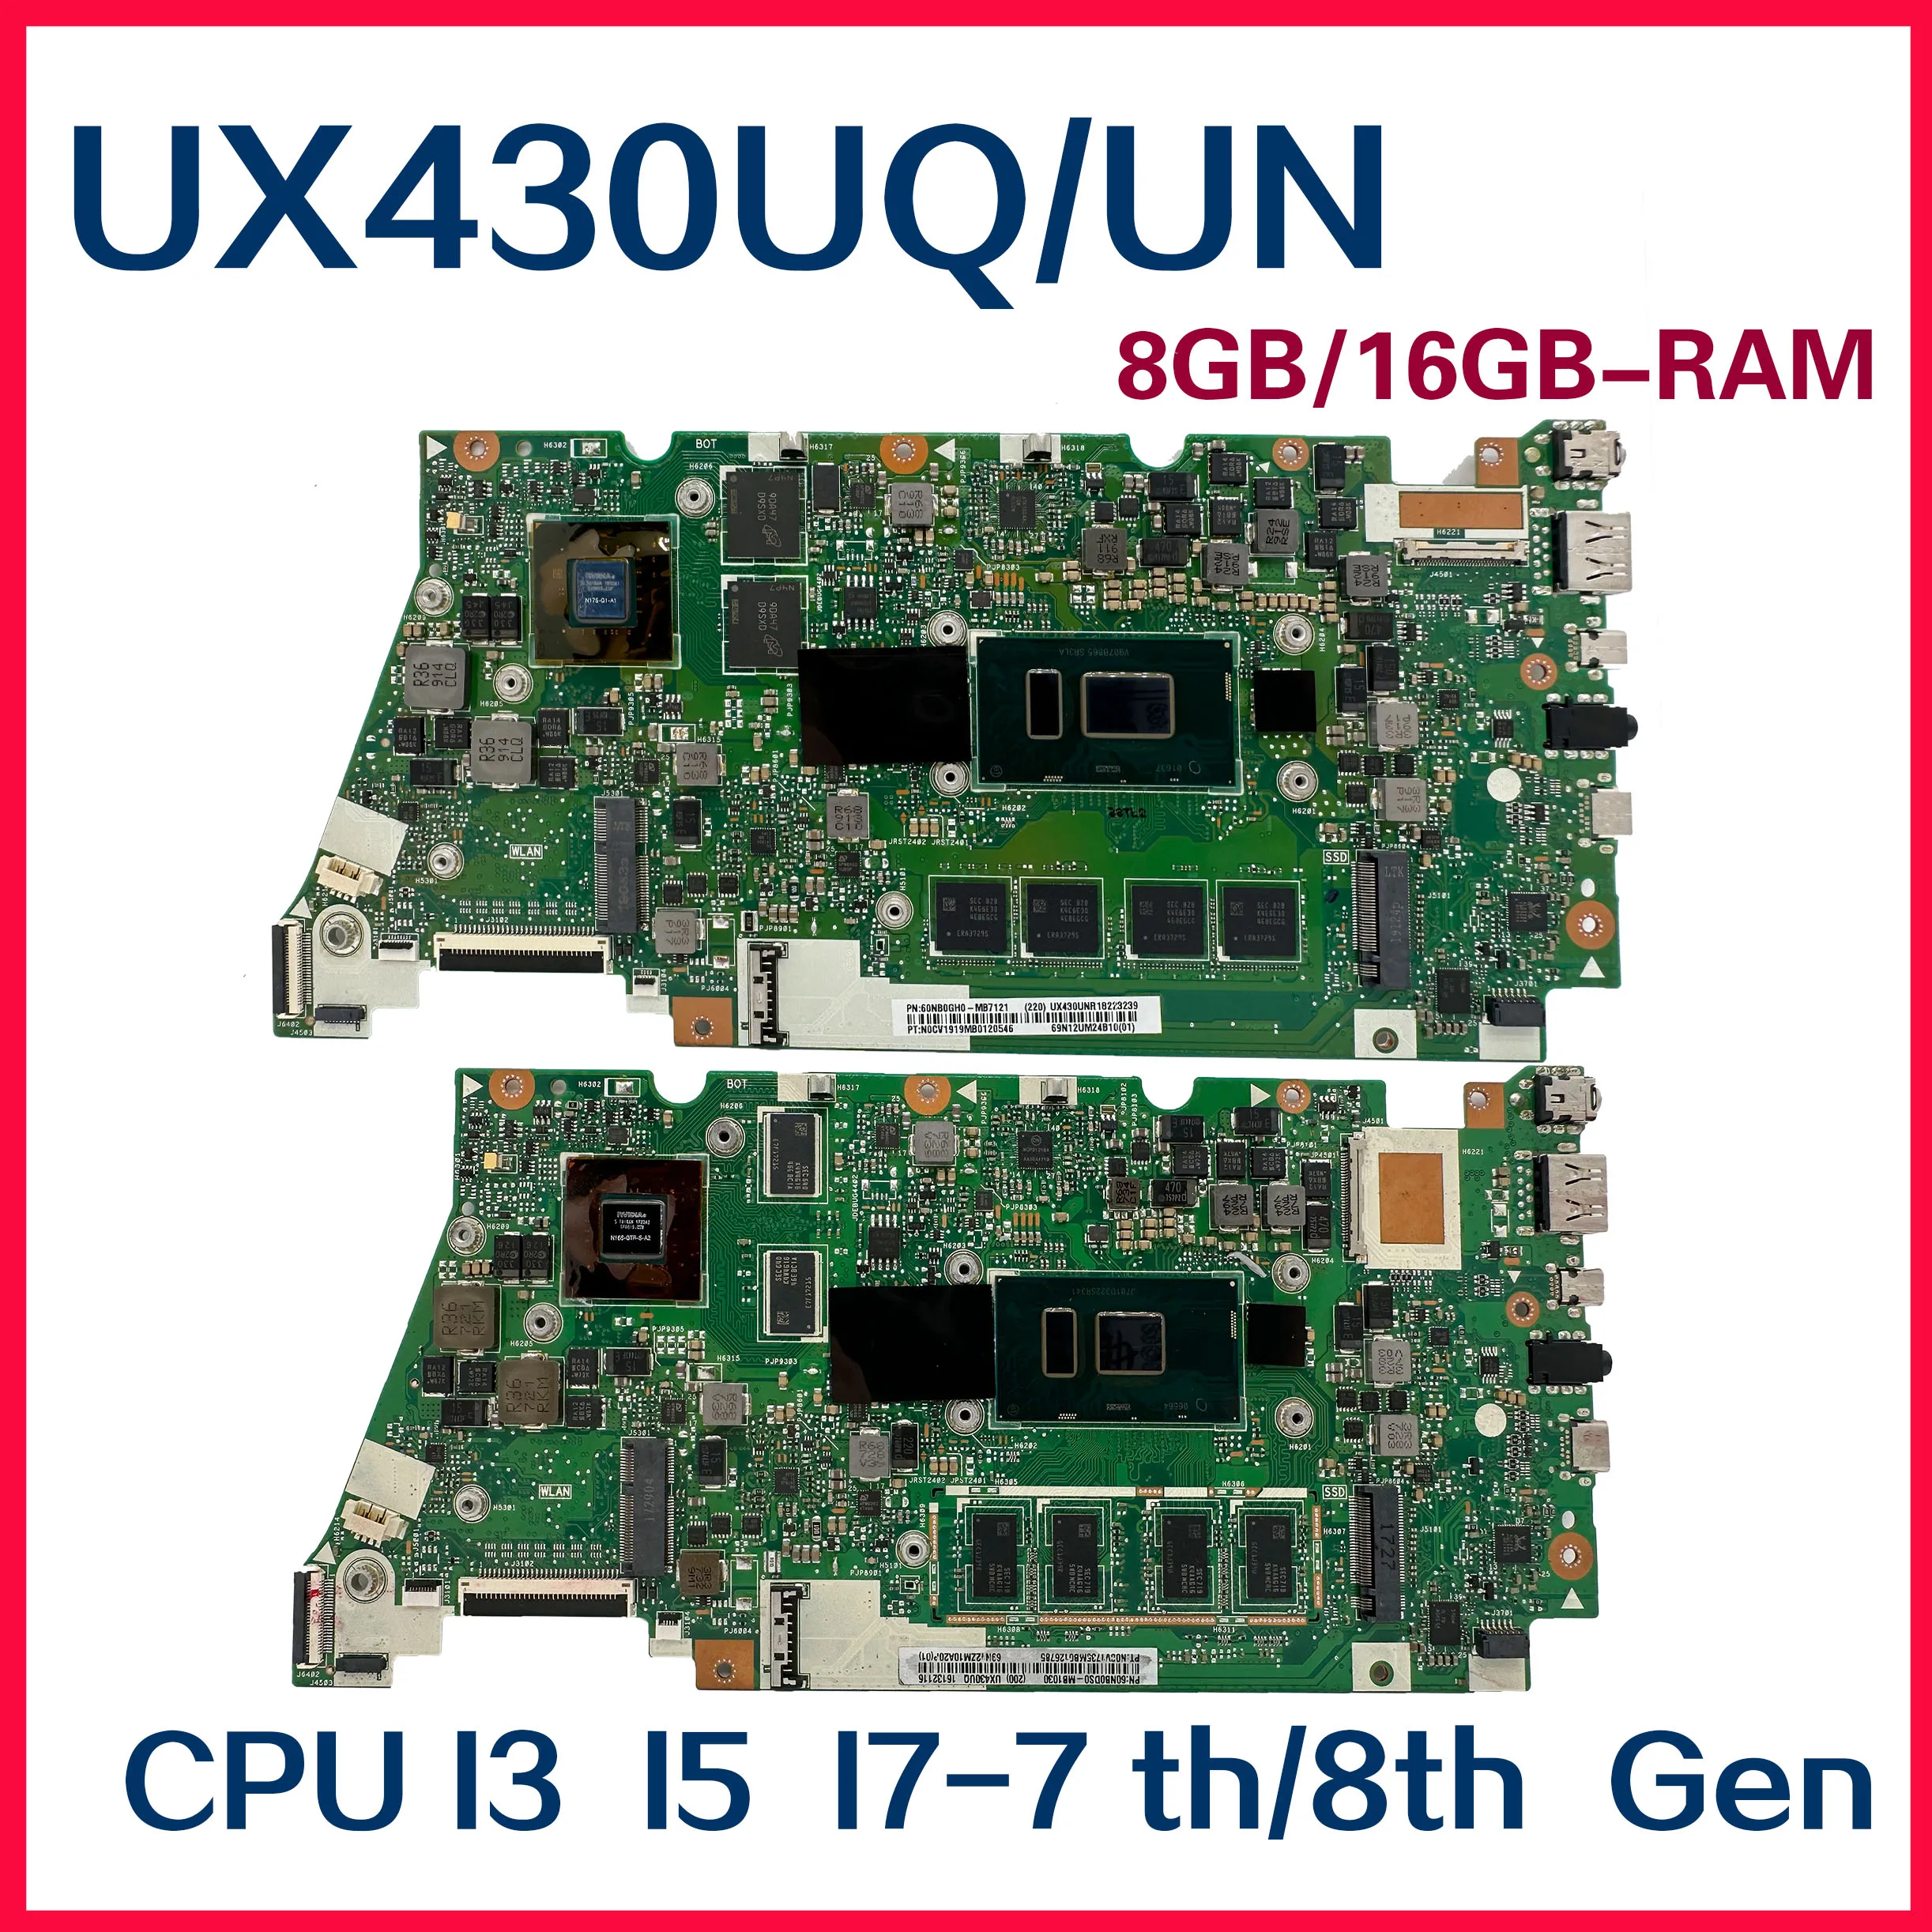 Asus Zenbook Motherboard Ux430 | Asus Ux430u I7 Motherboard | Asus Ux430uq - Laptop Motherboard - Aliexpress